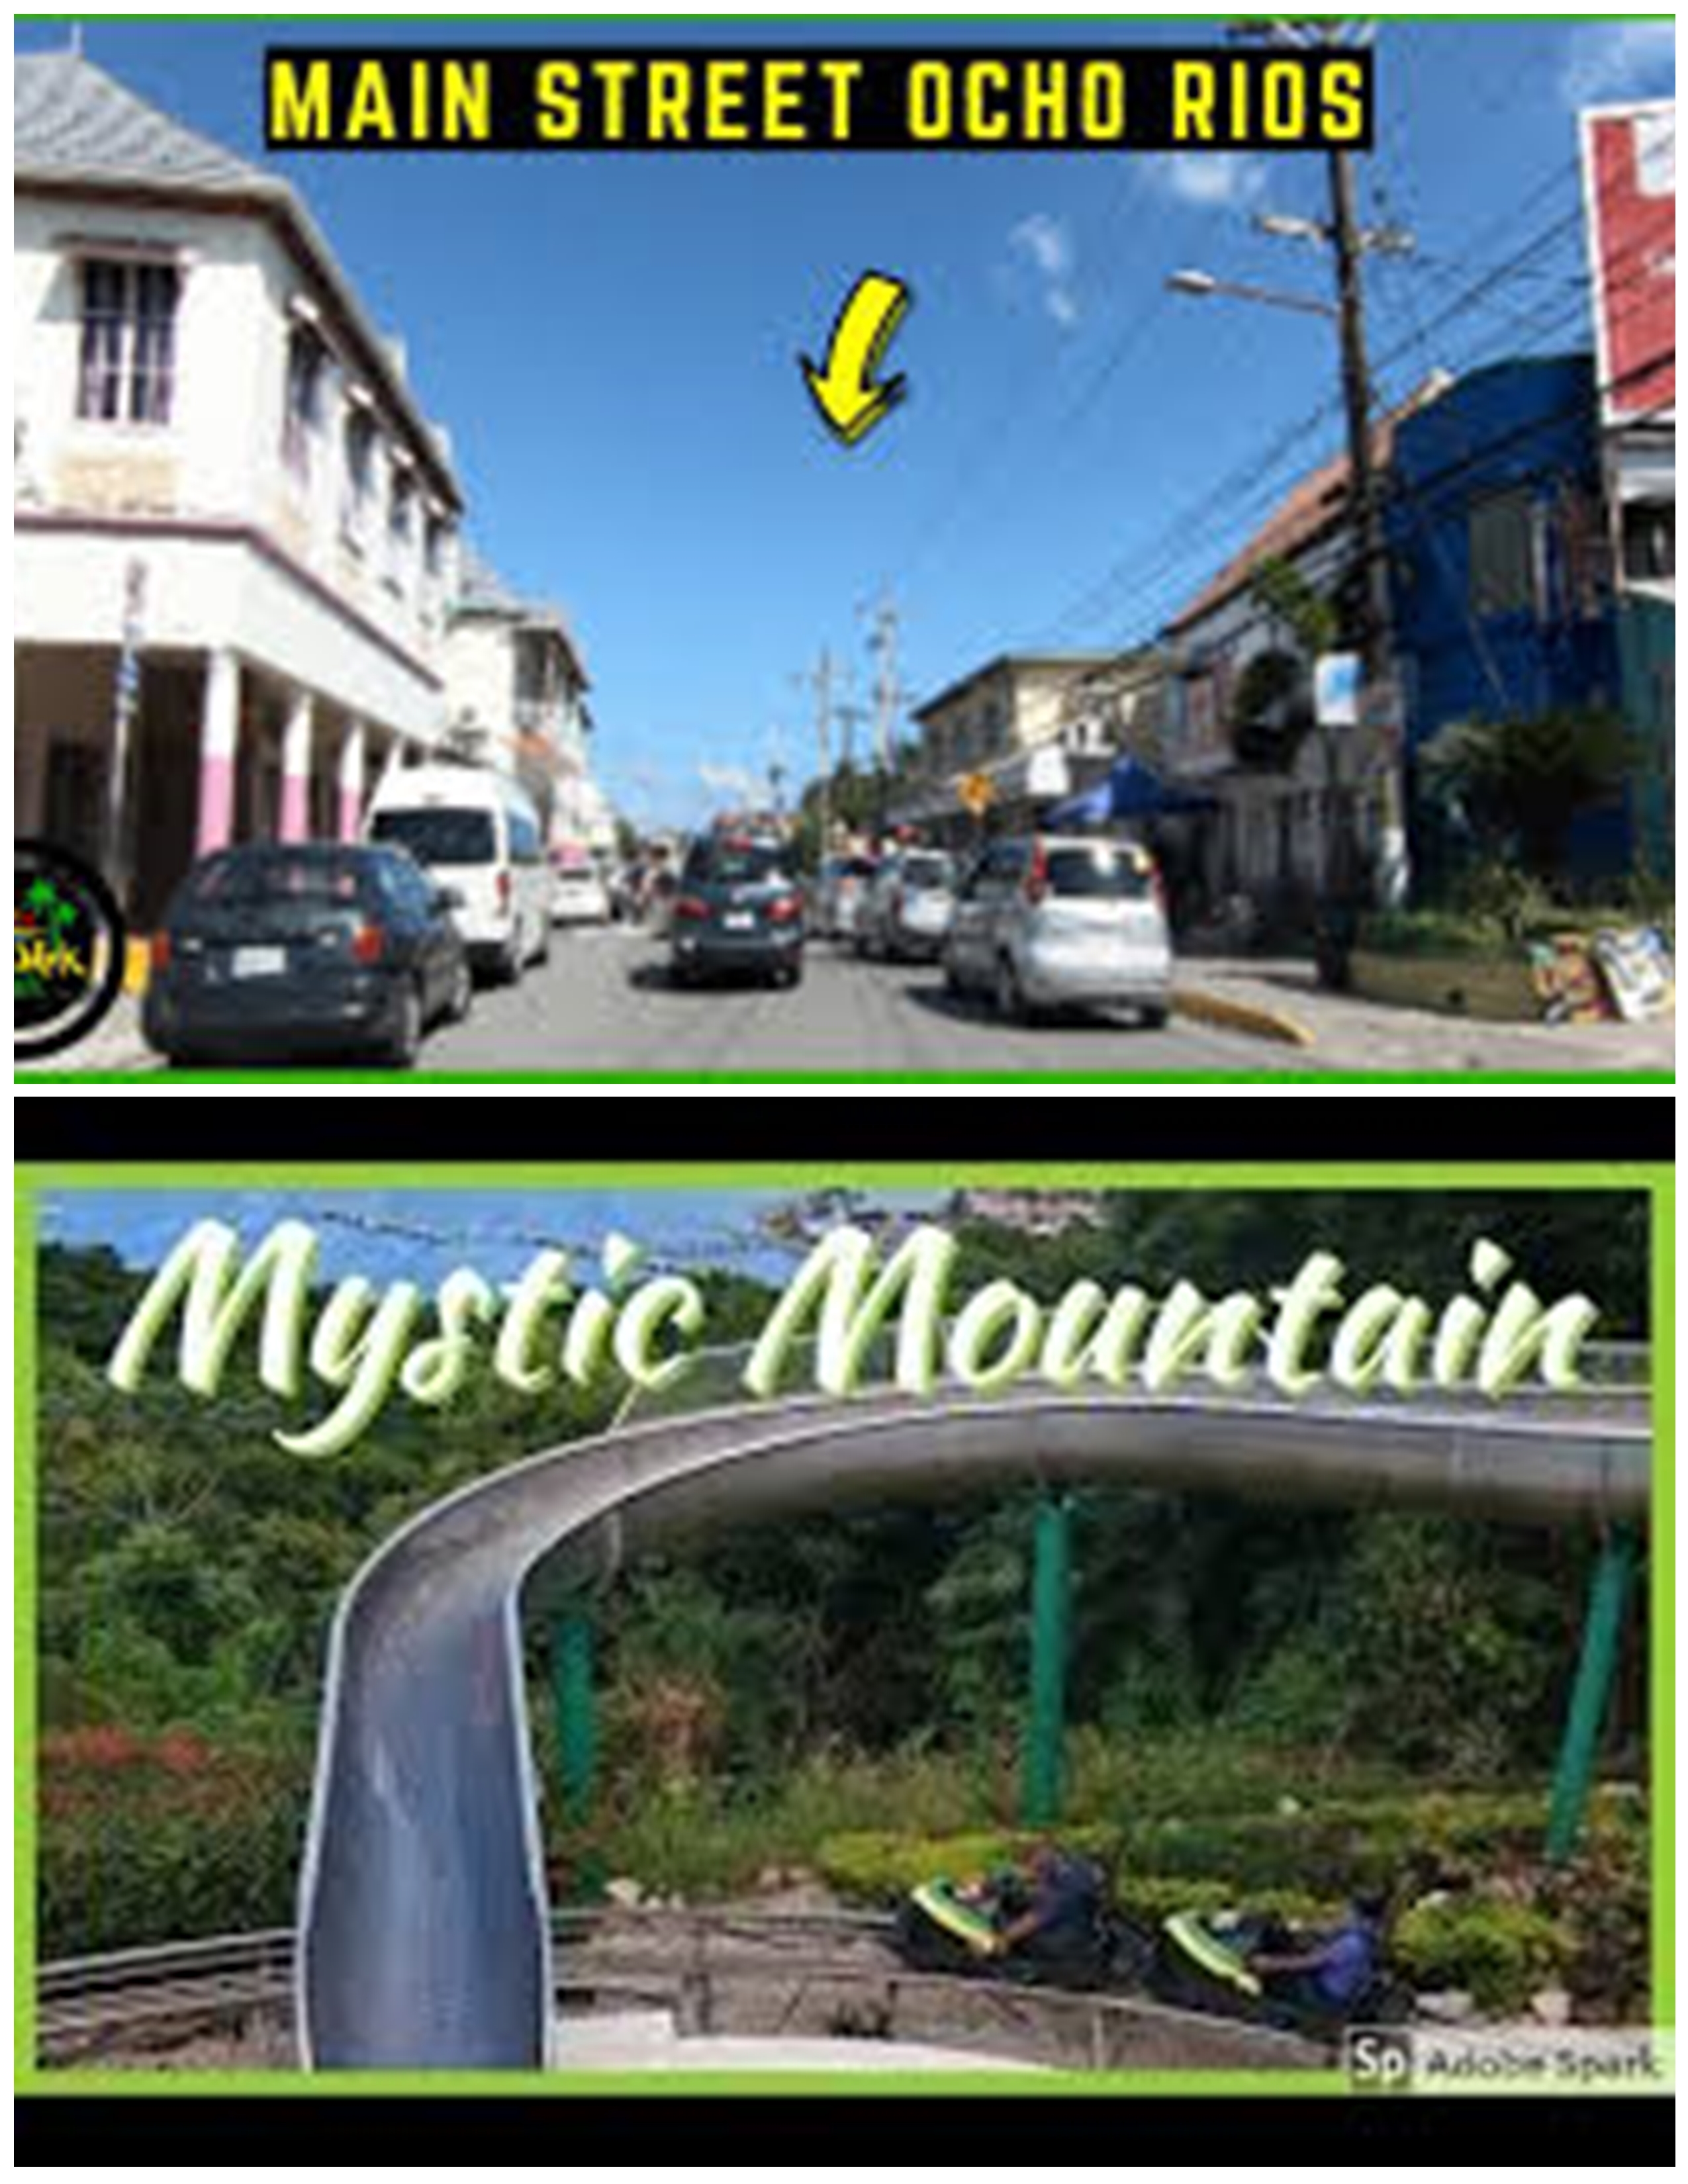 From Main Street Ocho Rios - Mystic Mountain ( Round Trip)